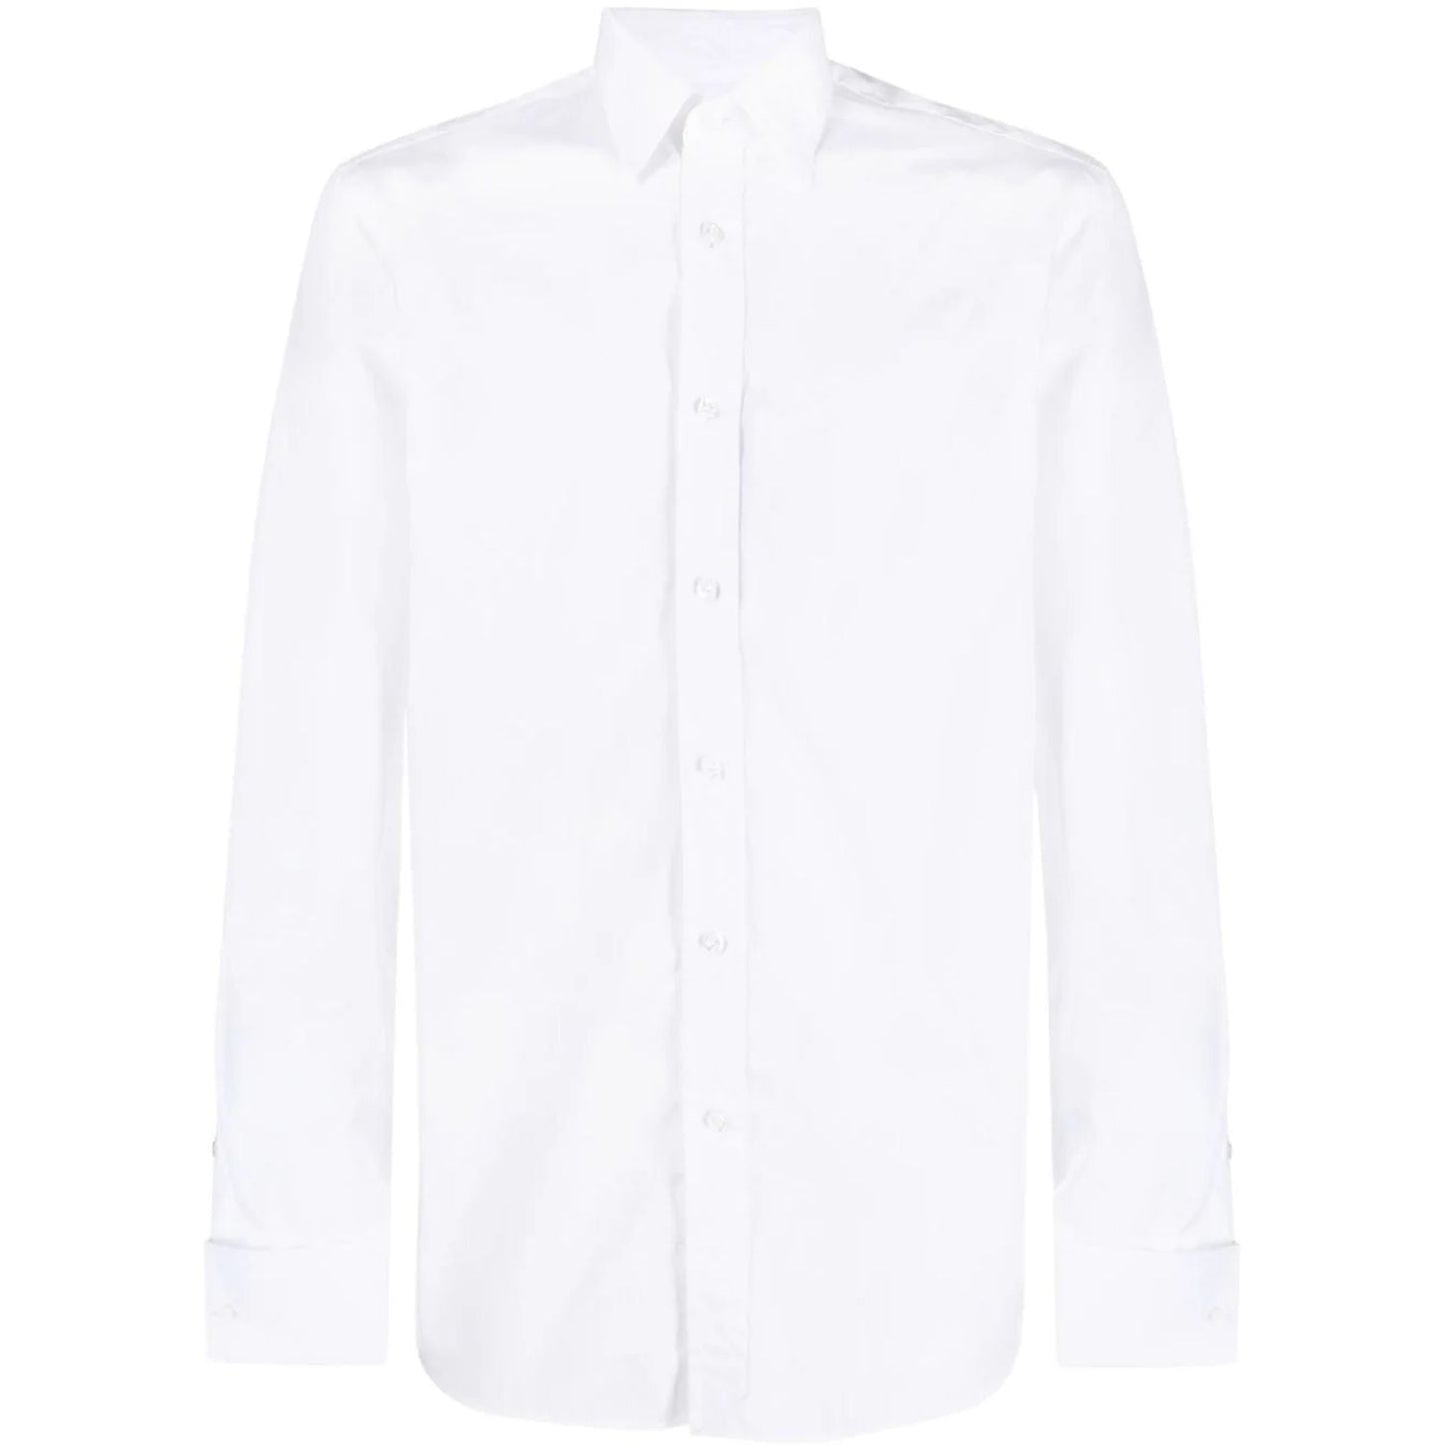 RALPH LAUREN vyriški balti marškinėliai ilgomis rankovėmis Long sleeve dress shirt